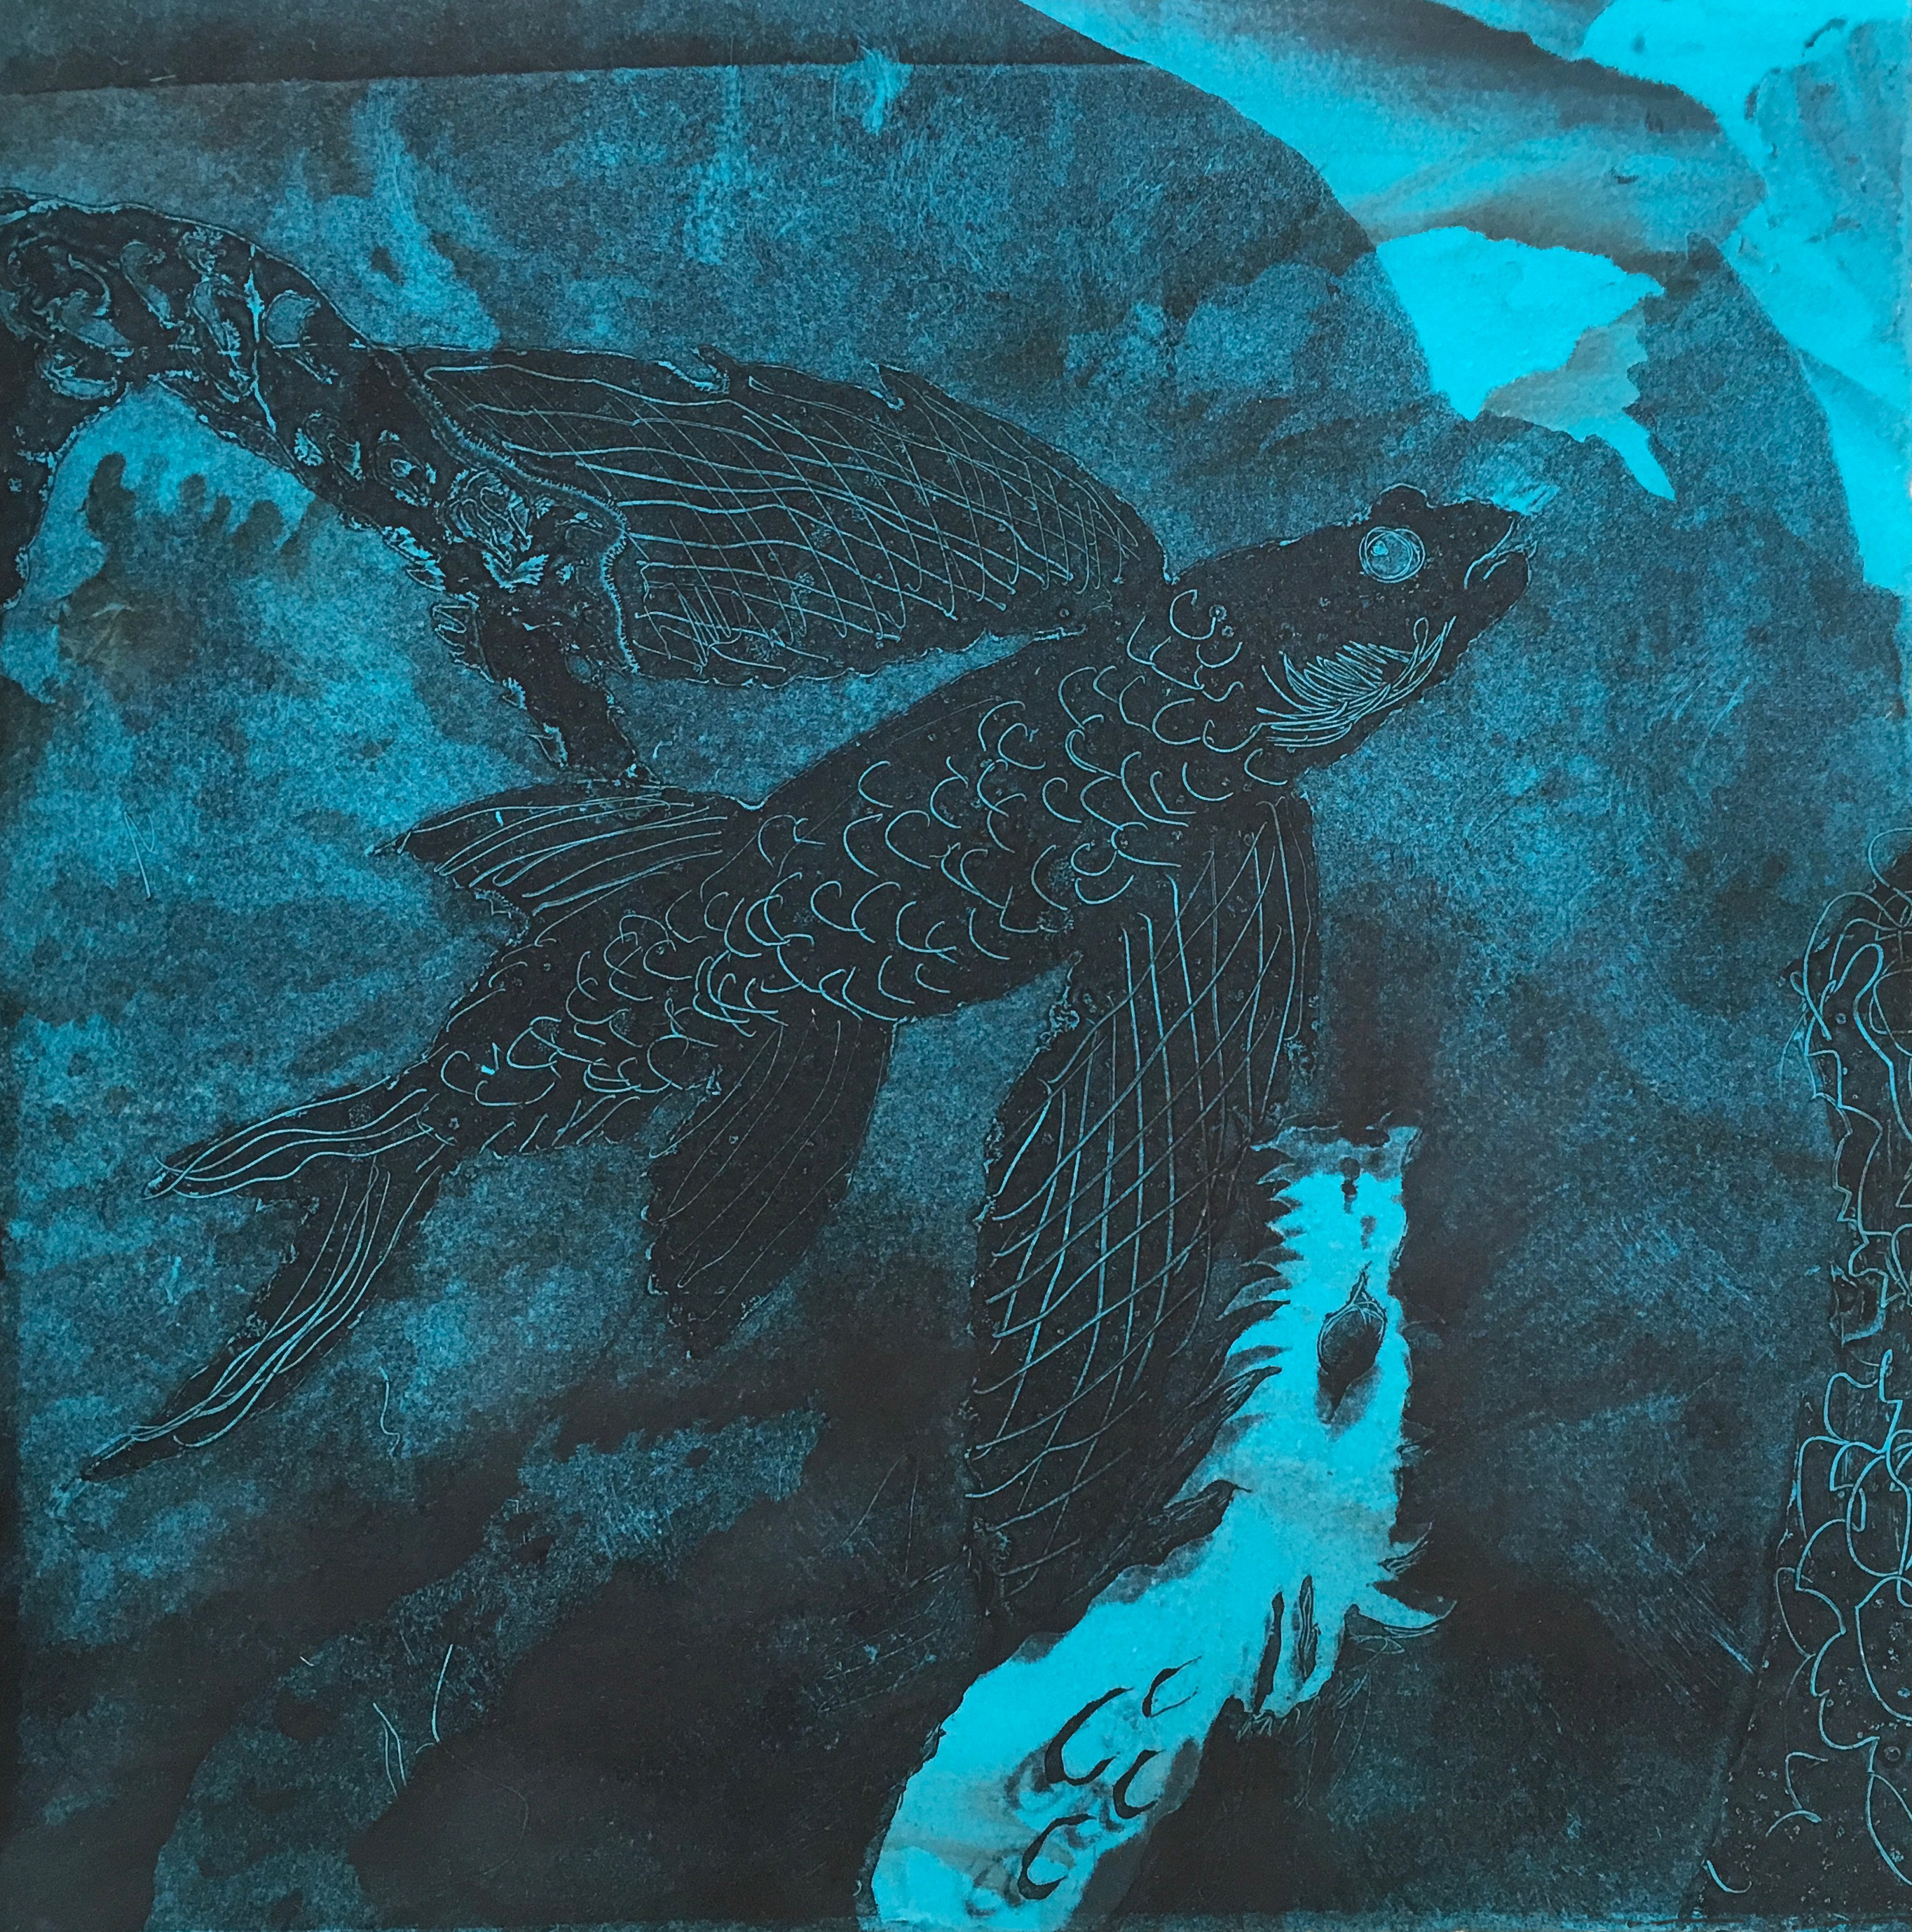 Black Fish with Blue Dragon